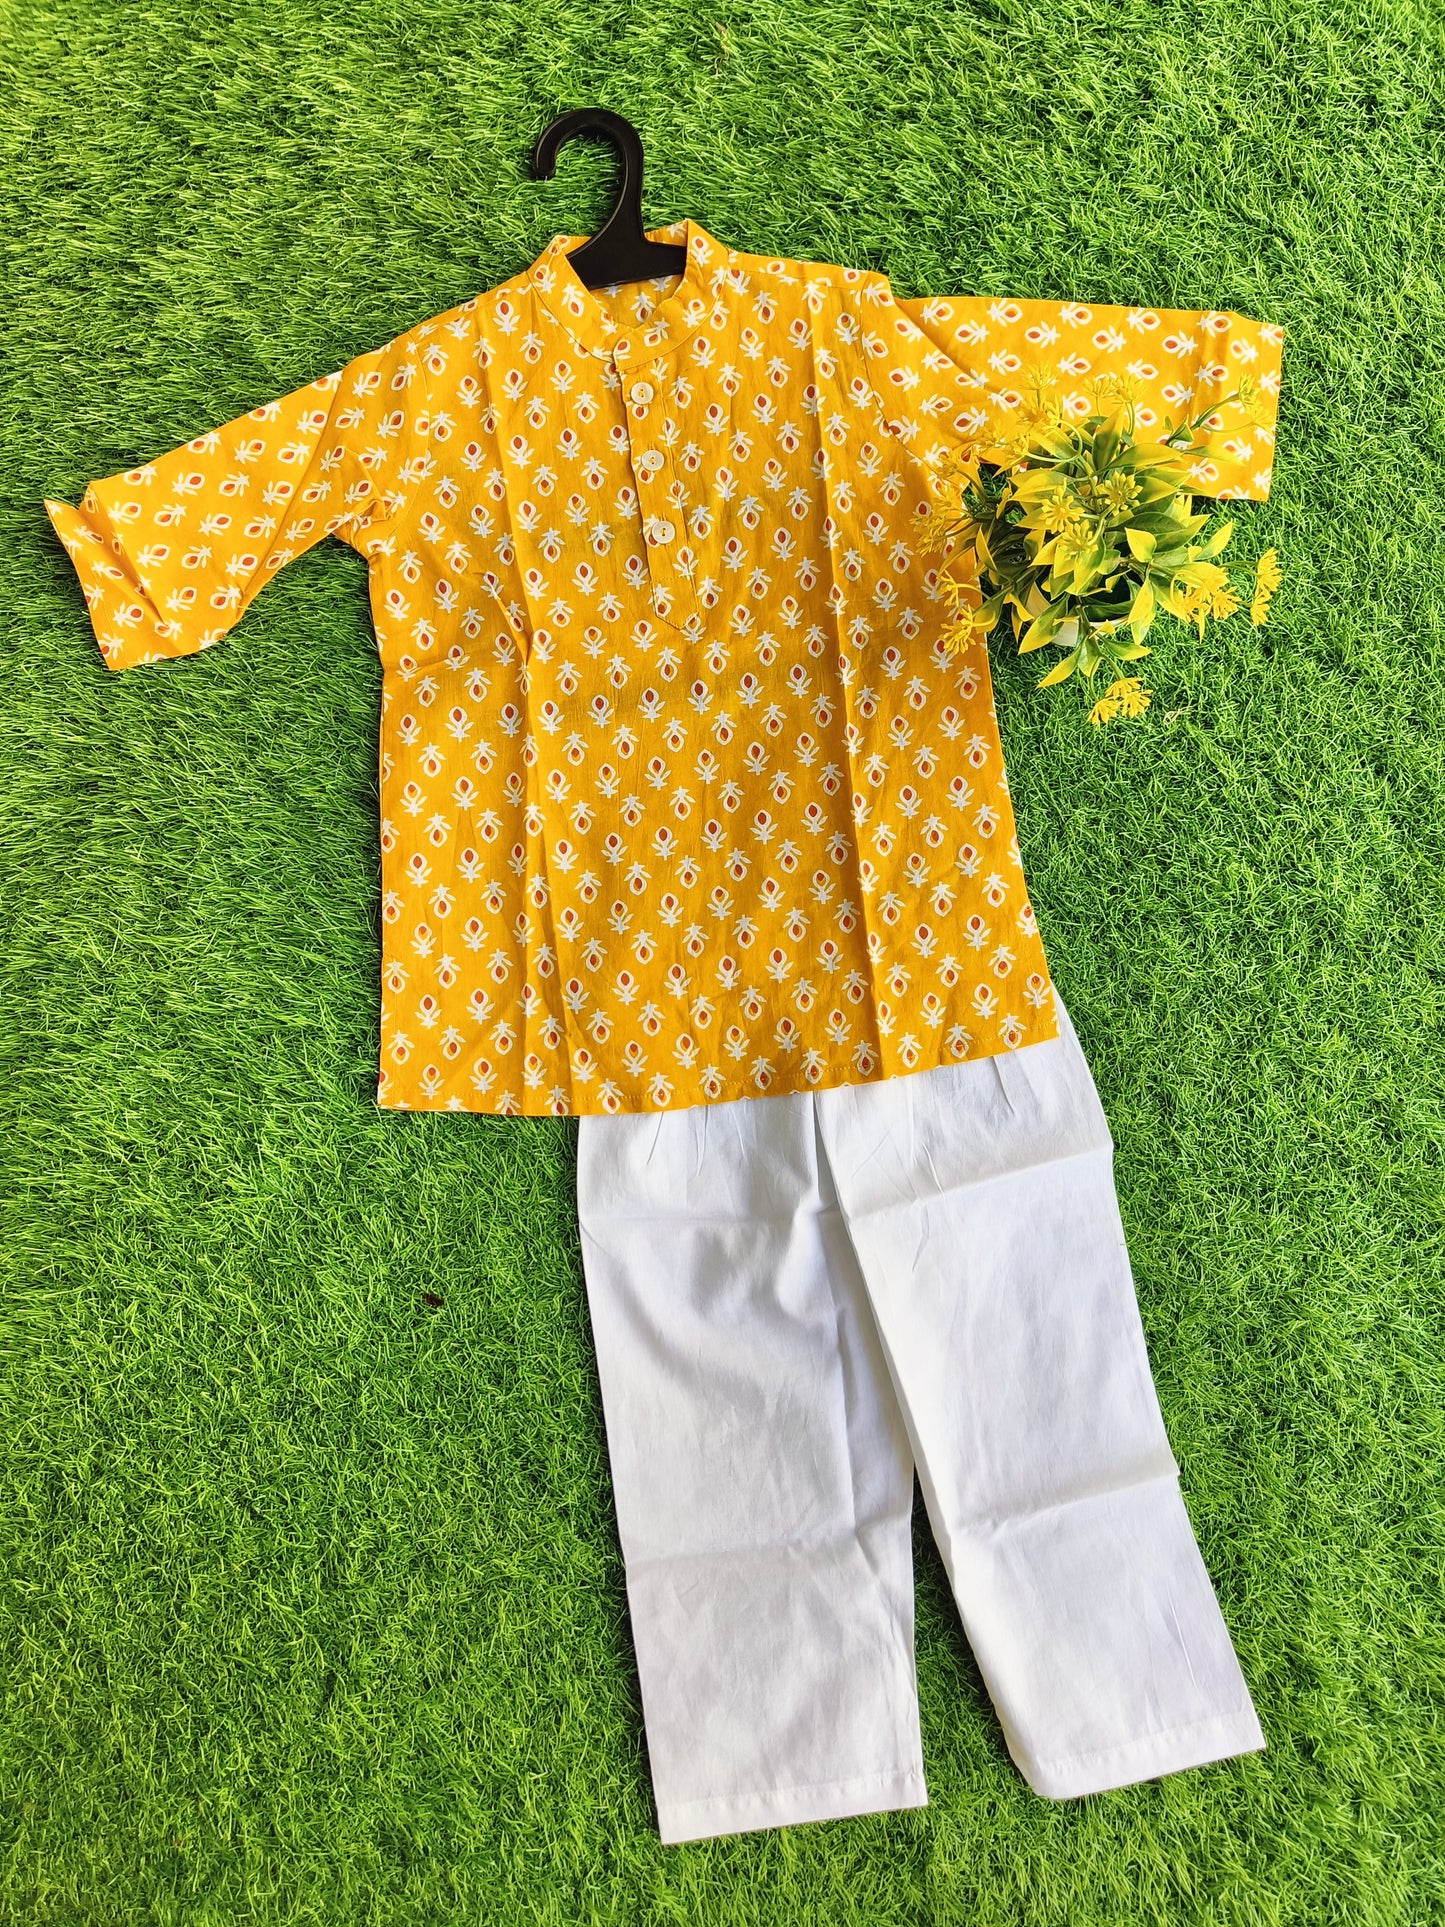 Glossy Yellowish Printed Cotton Kurta Pajama Outfit Set for Boy